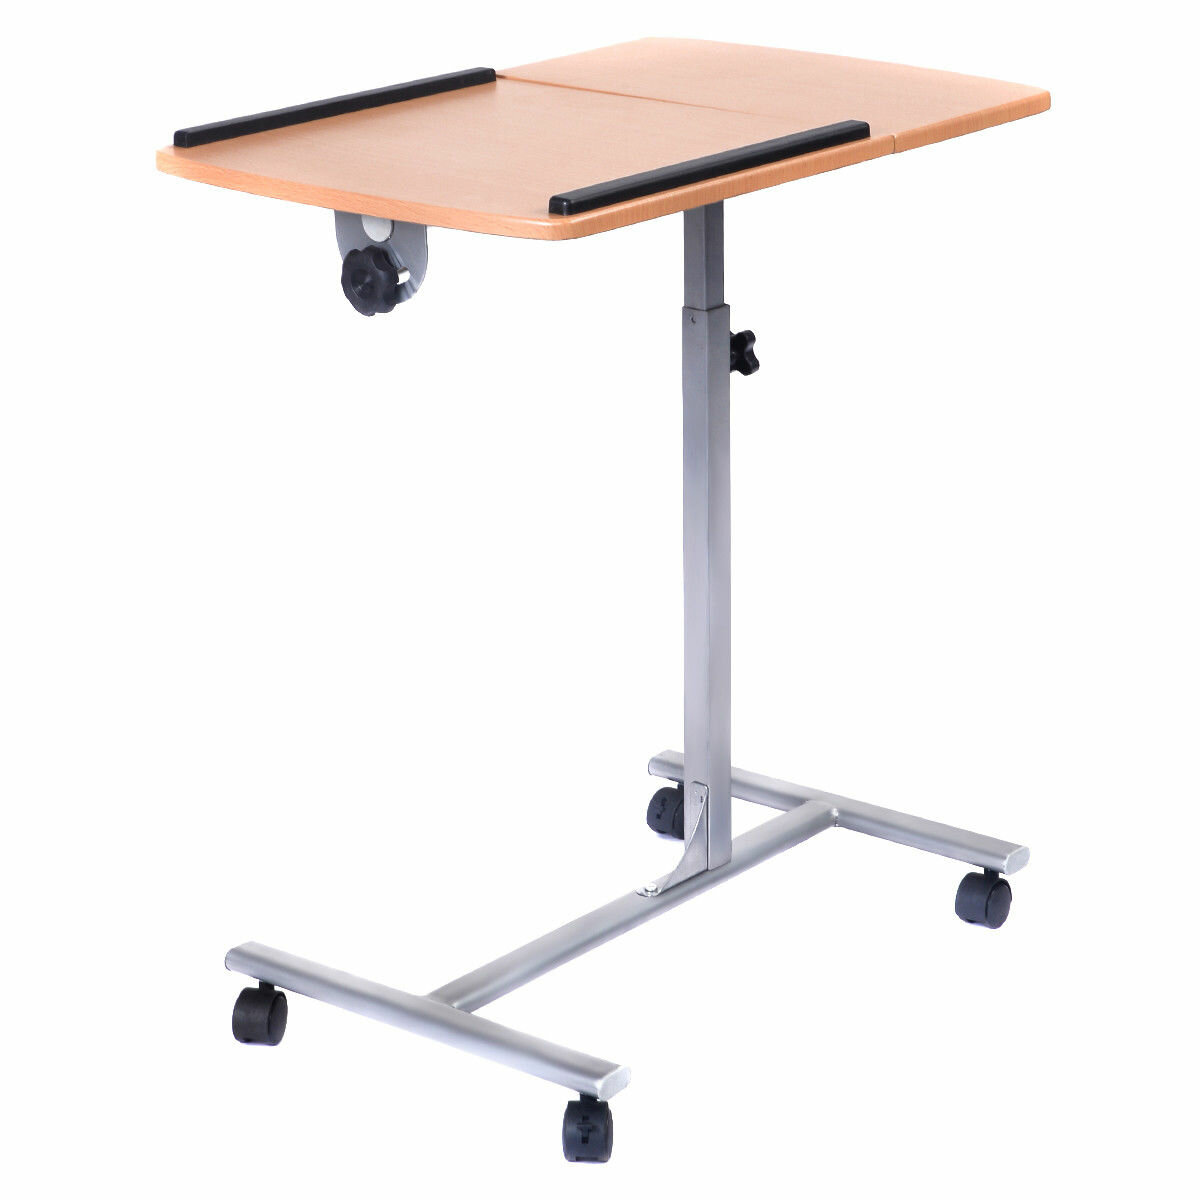 Symple Stuff Rylie Height Adjustable Standing Desk Reviews Wayfair